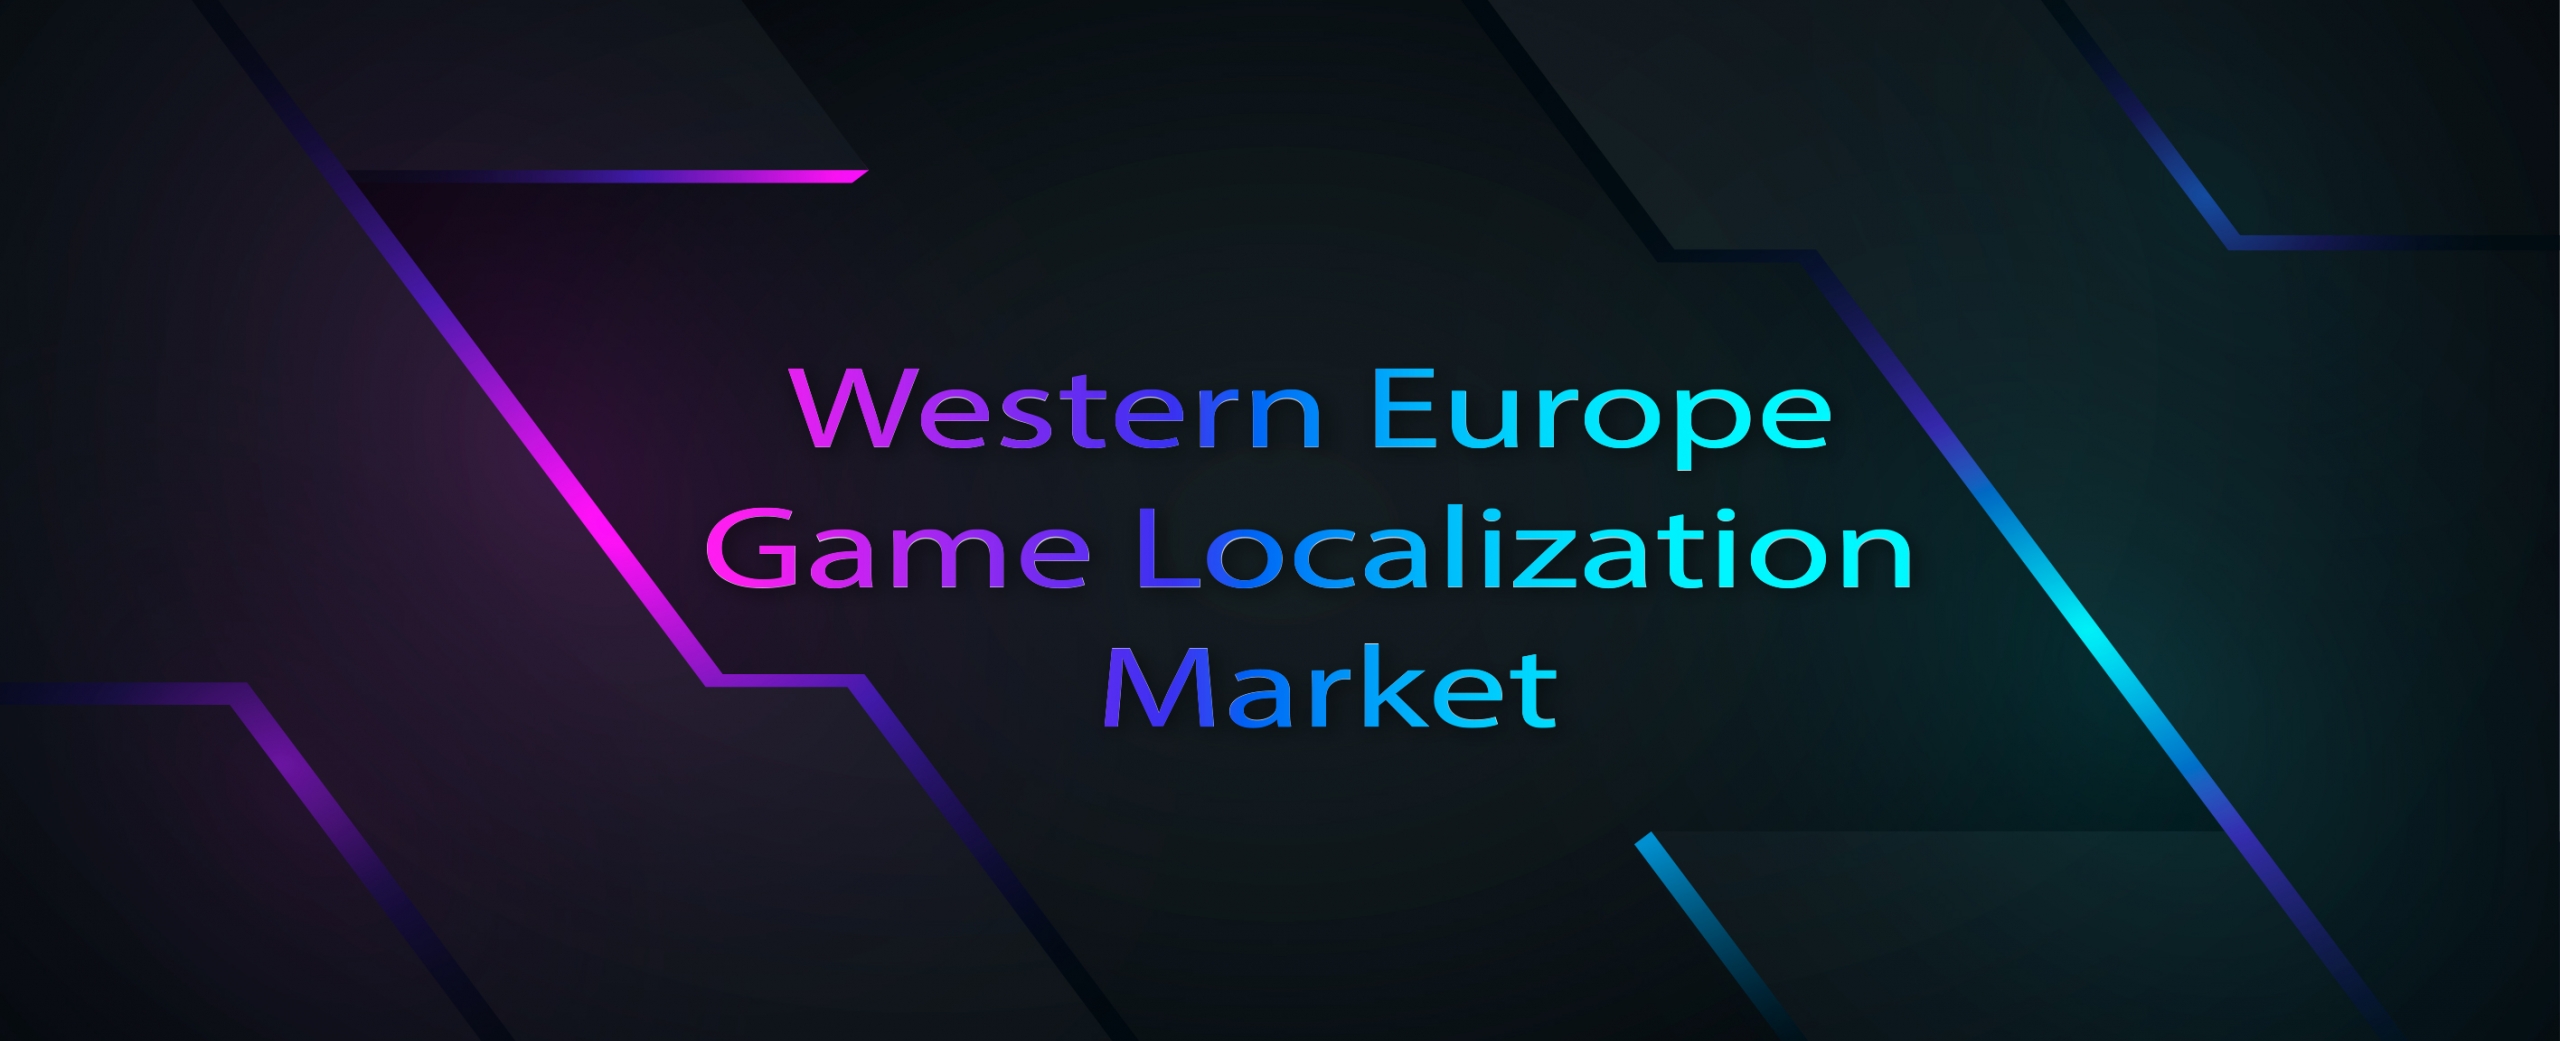 Western Europe game localization market